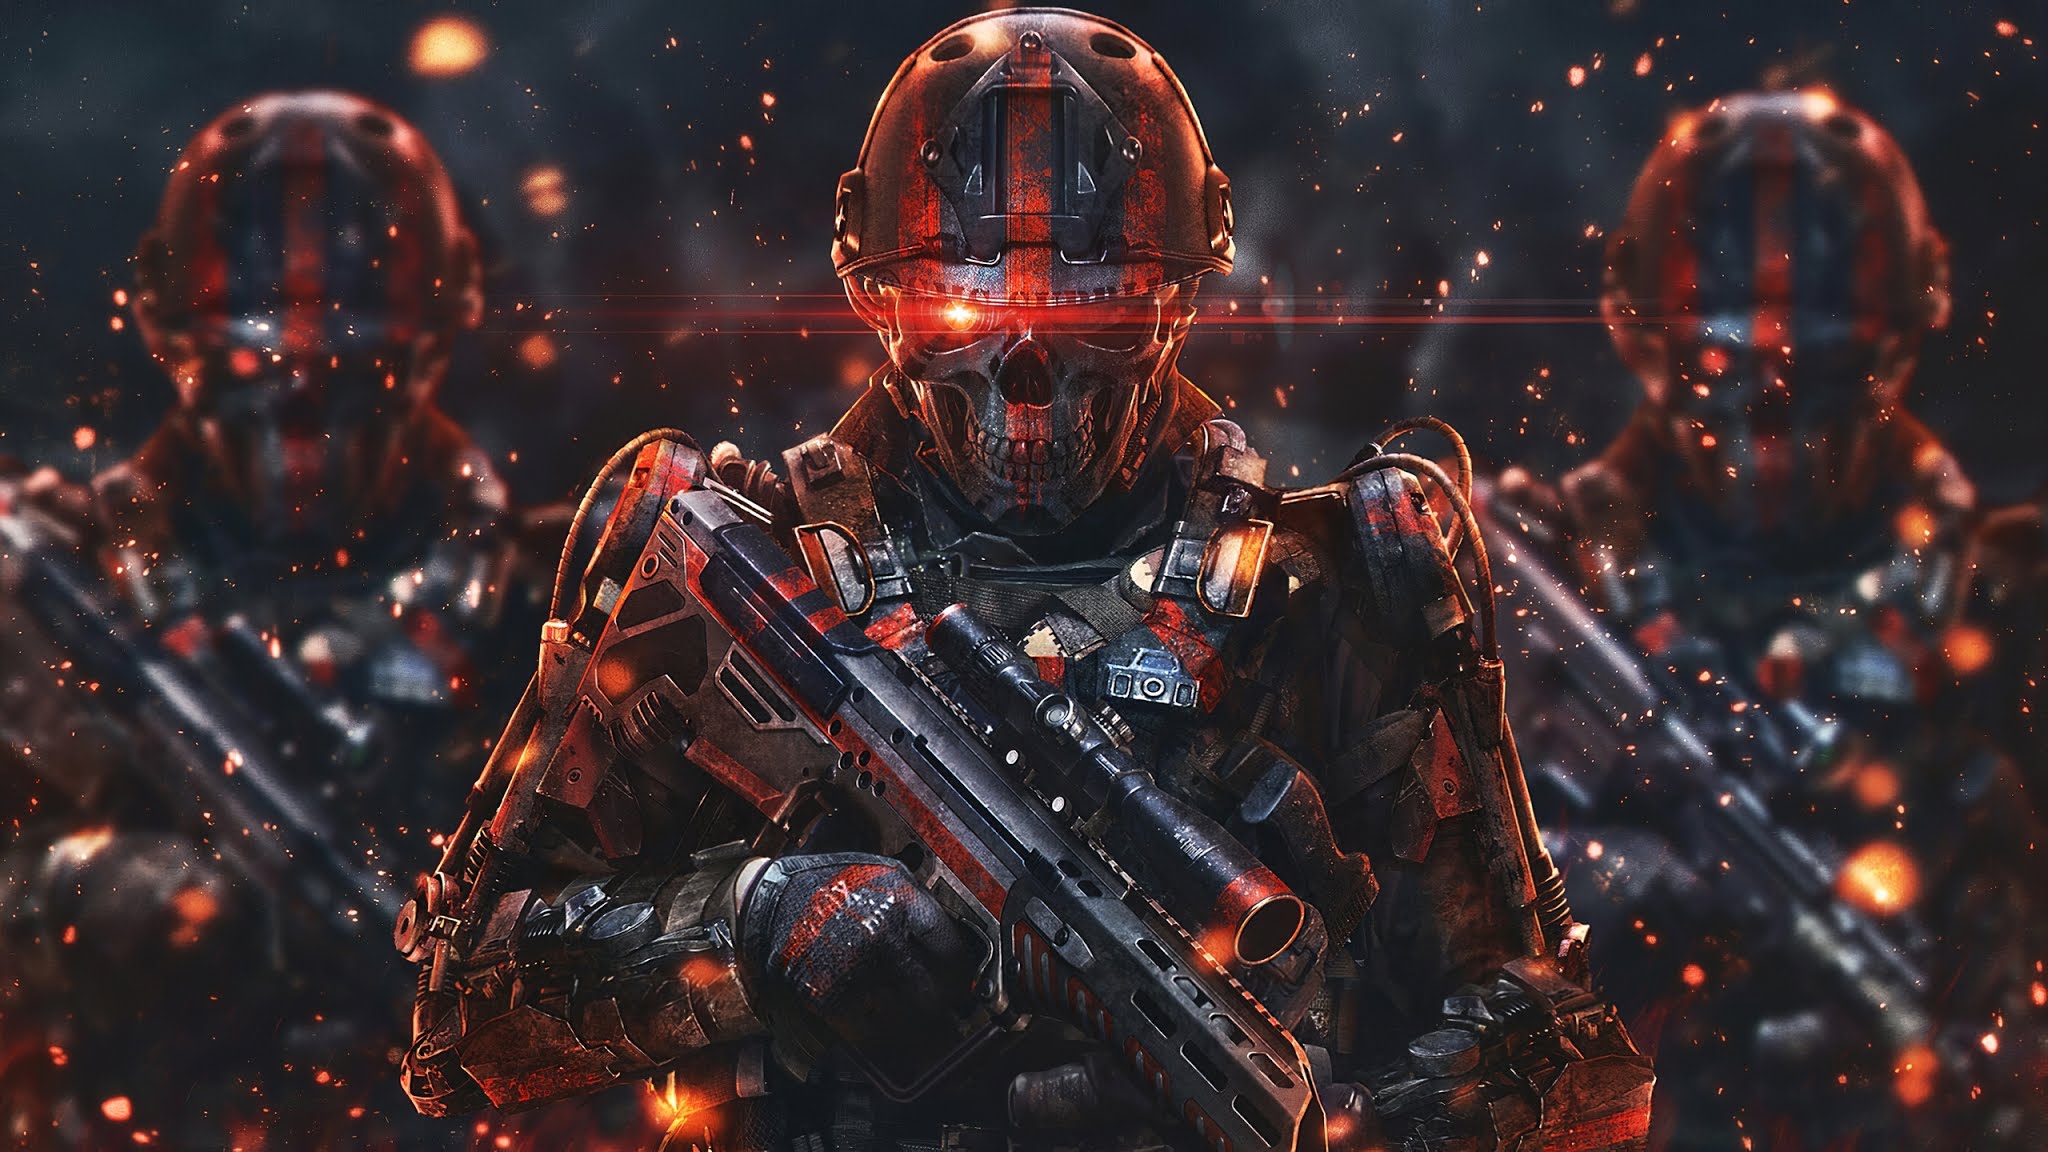 Sci-fi Dead Army Wallpaper - Robot Soldier Science Fiction - HD Wallpaper 